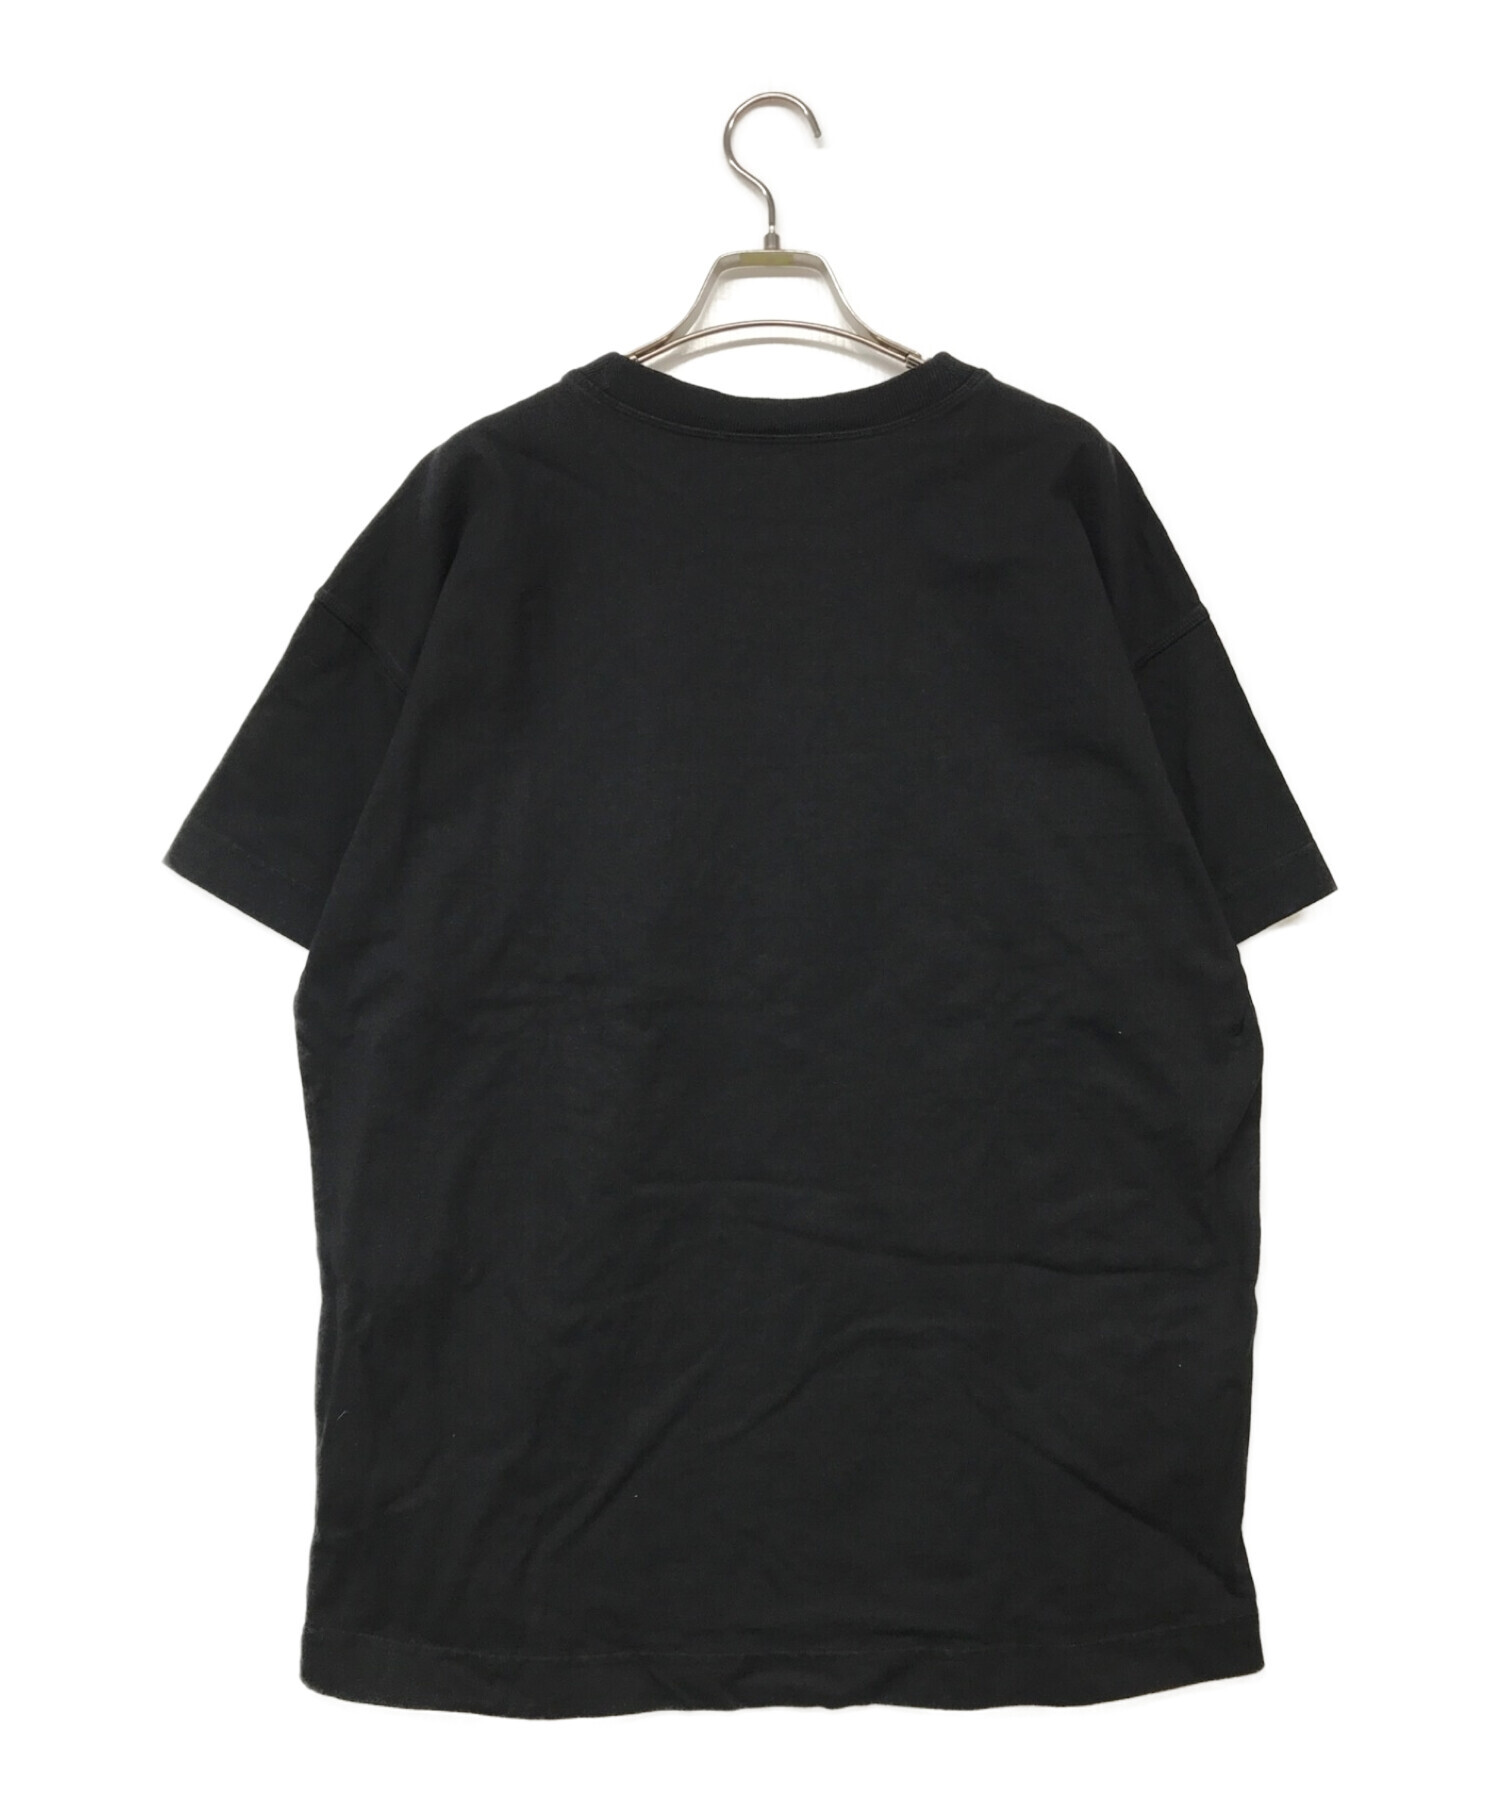 Acne studios (アクネストゥディオス) オーバーサイズロゴTシャツ ブラック サイズ:XS